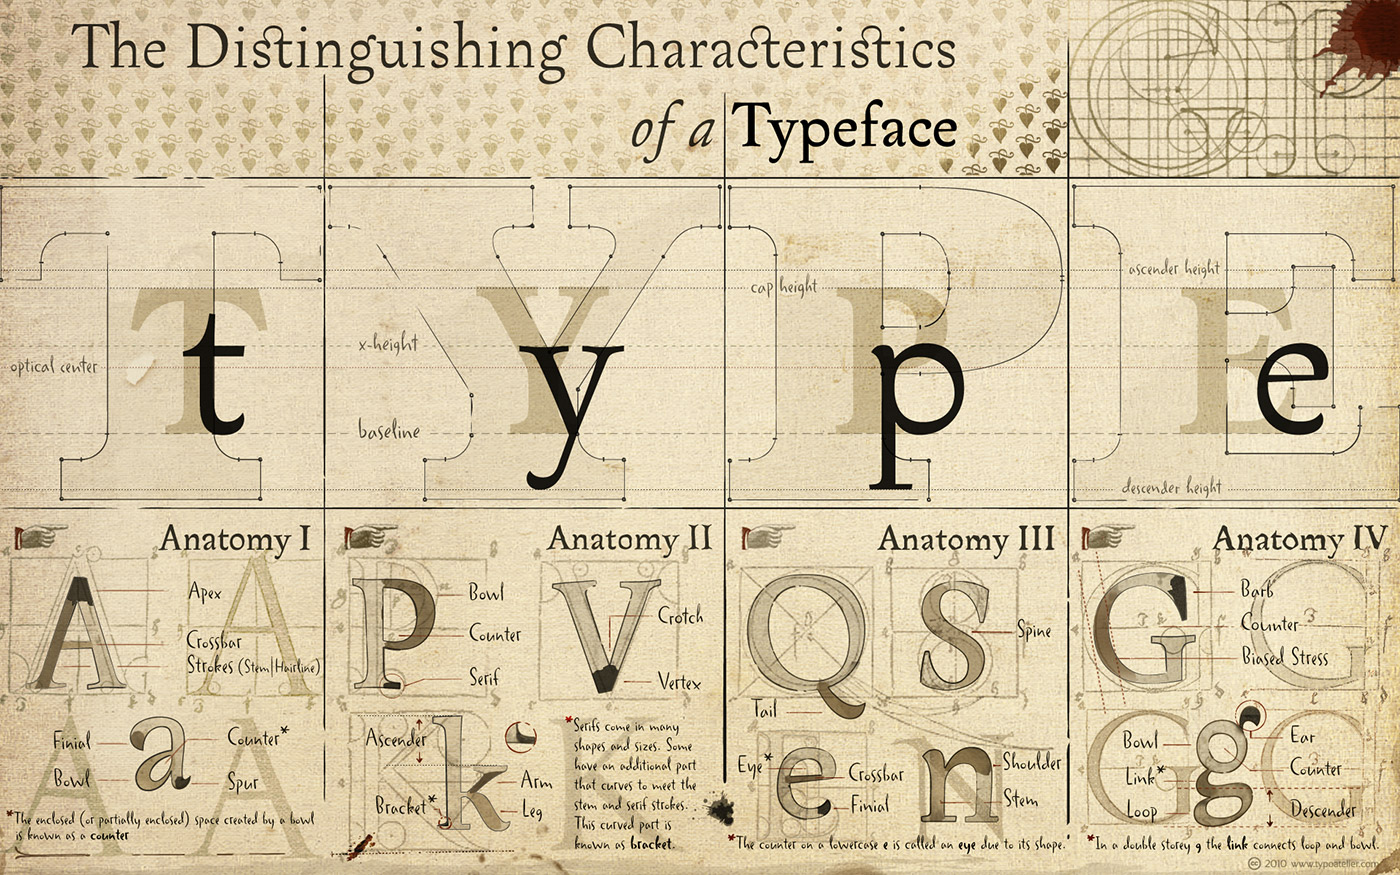 Typeface characteristics